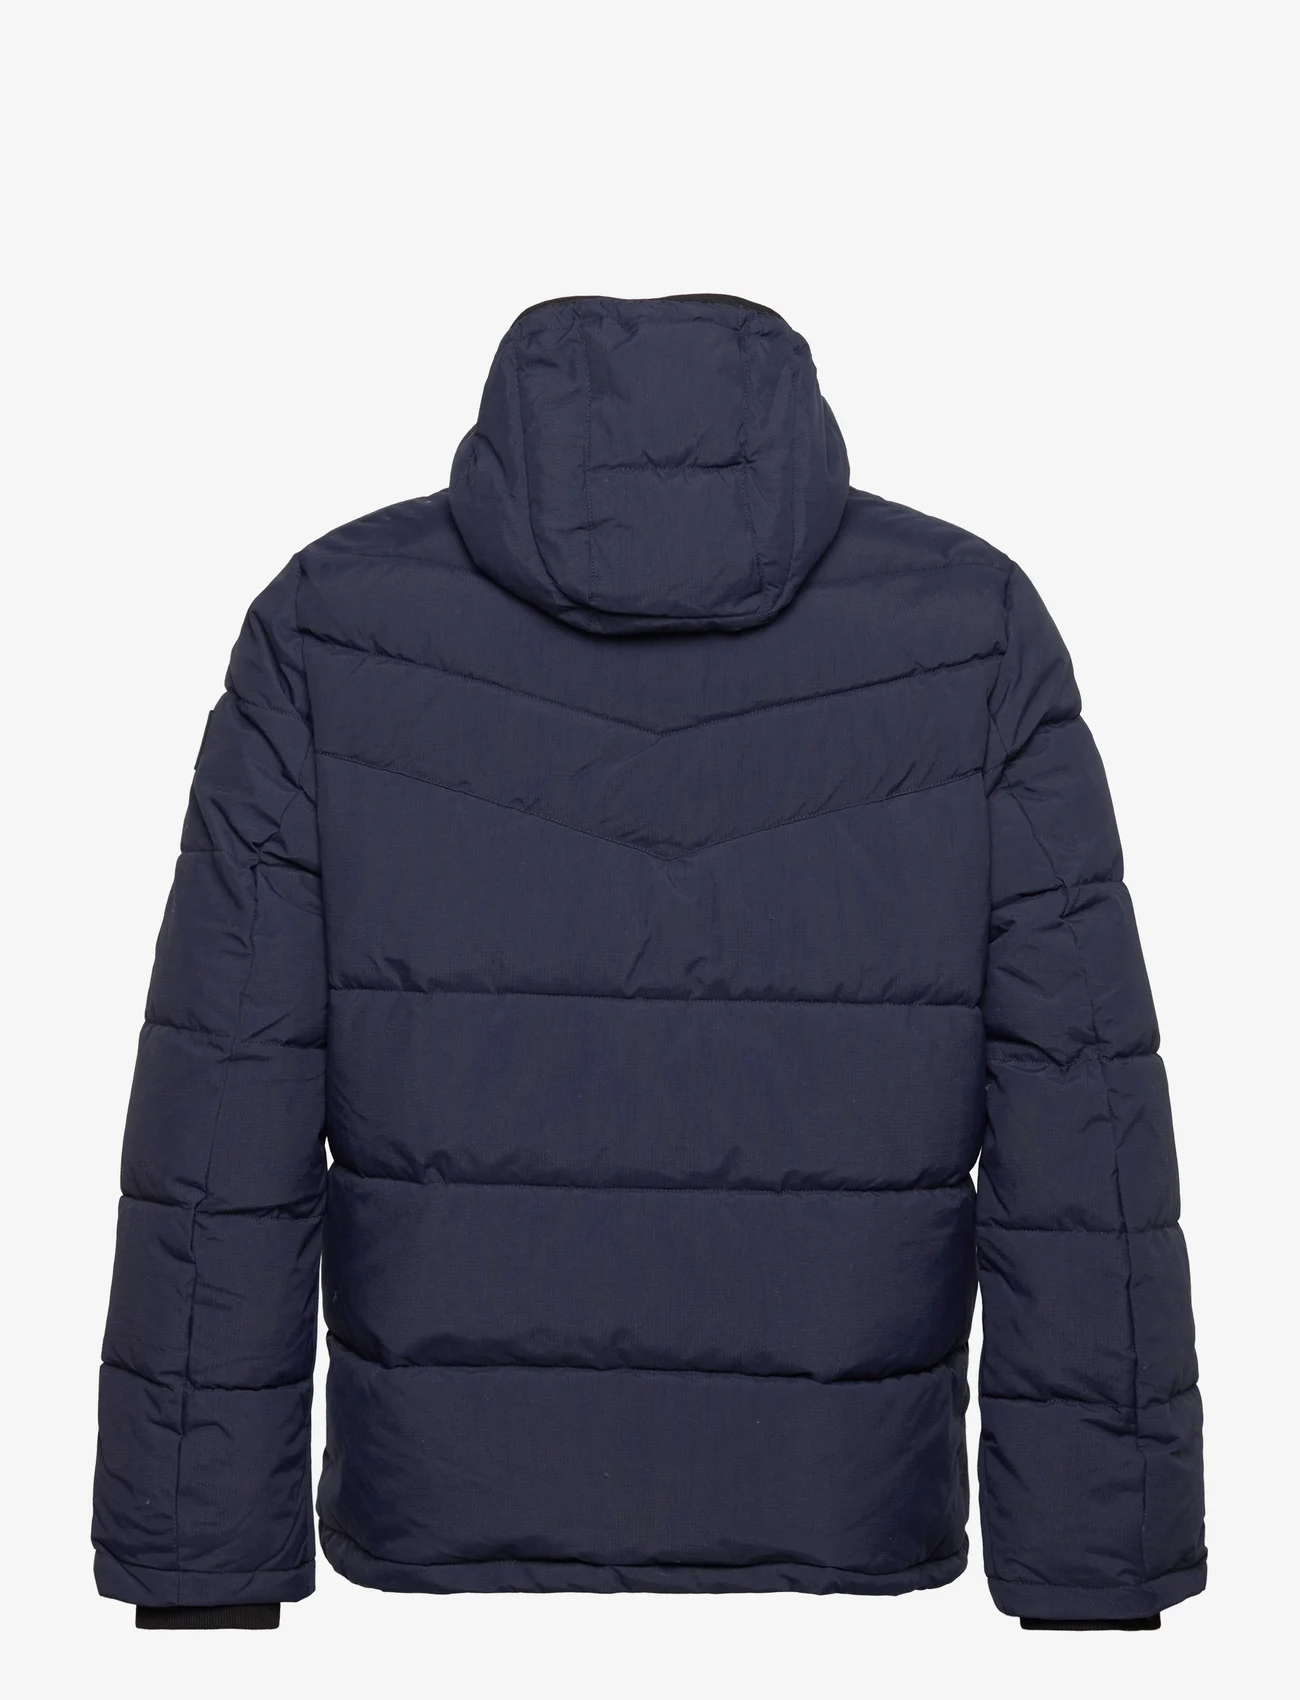 Tom Tailor - puffer jacket with hood - talvitakit - sky captain blue - 1